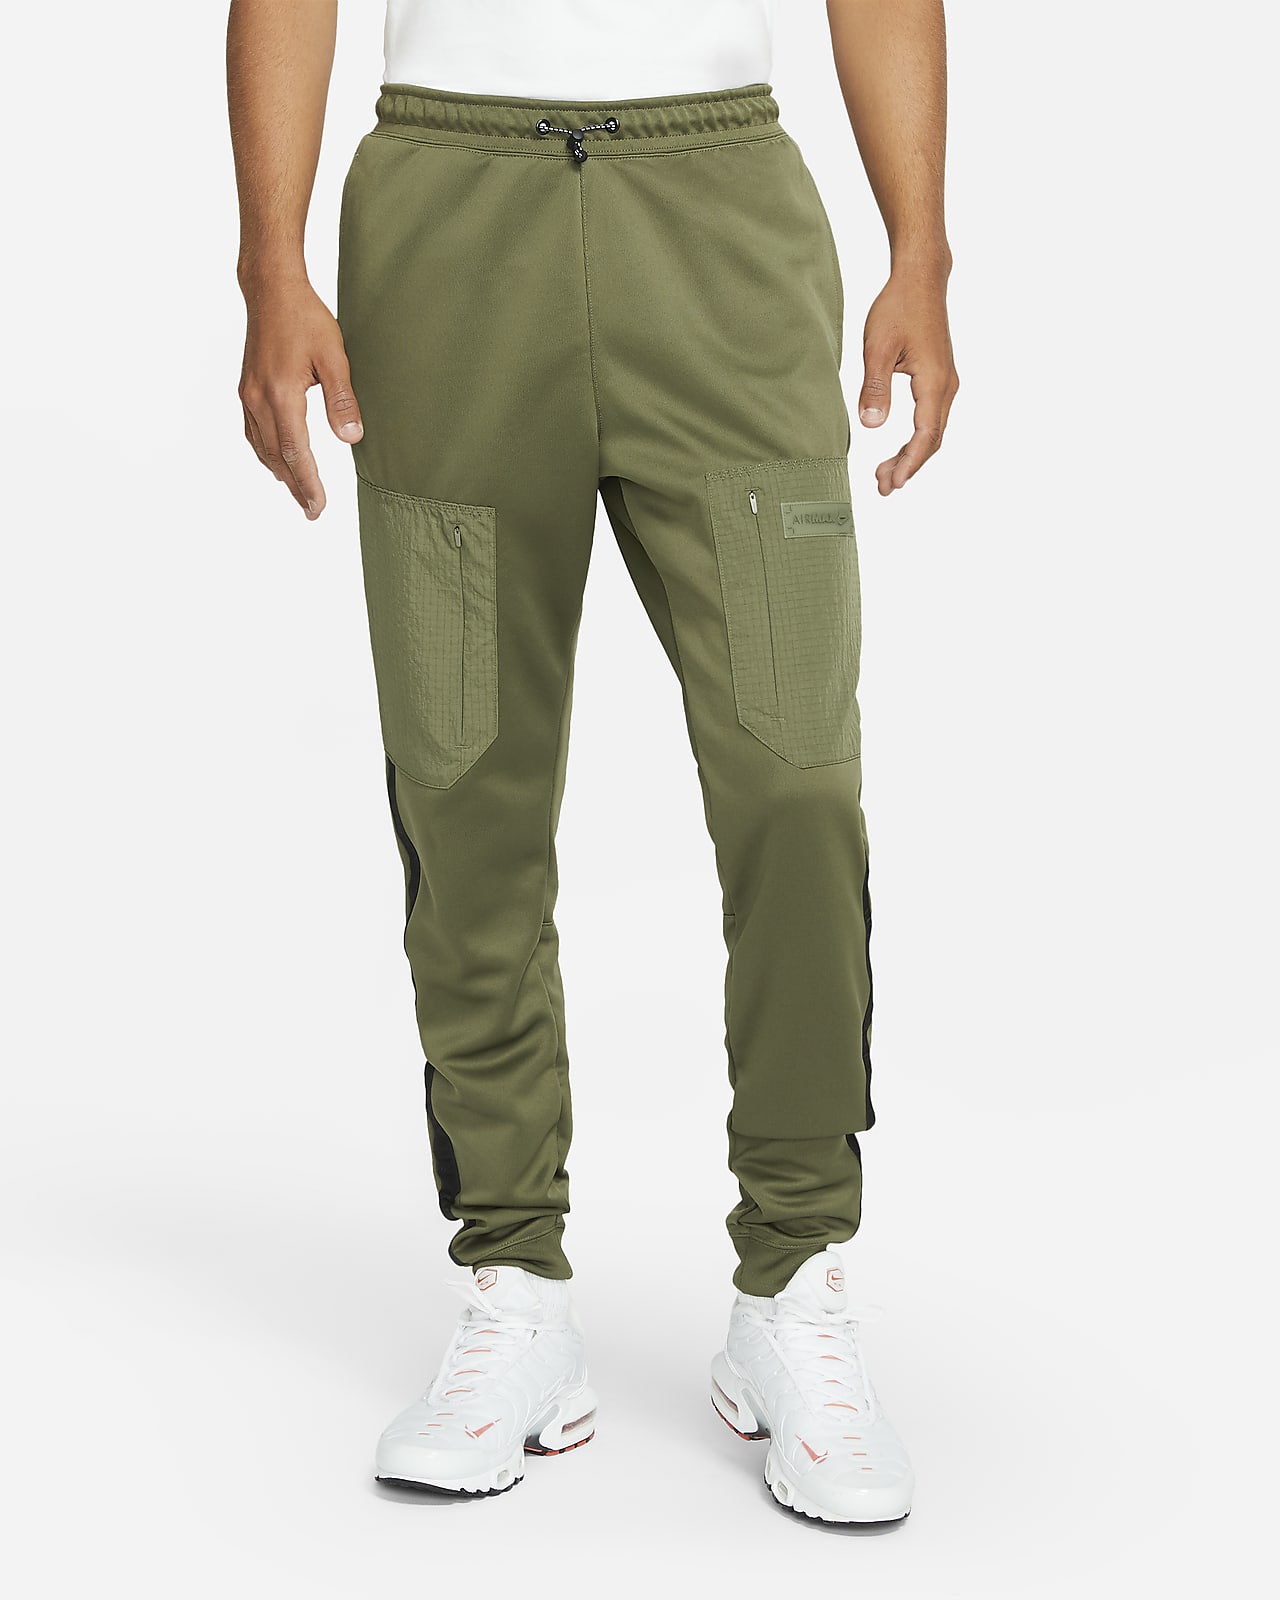 Nike Sportswear Air Max Men's Trousers